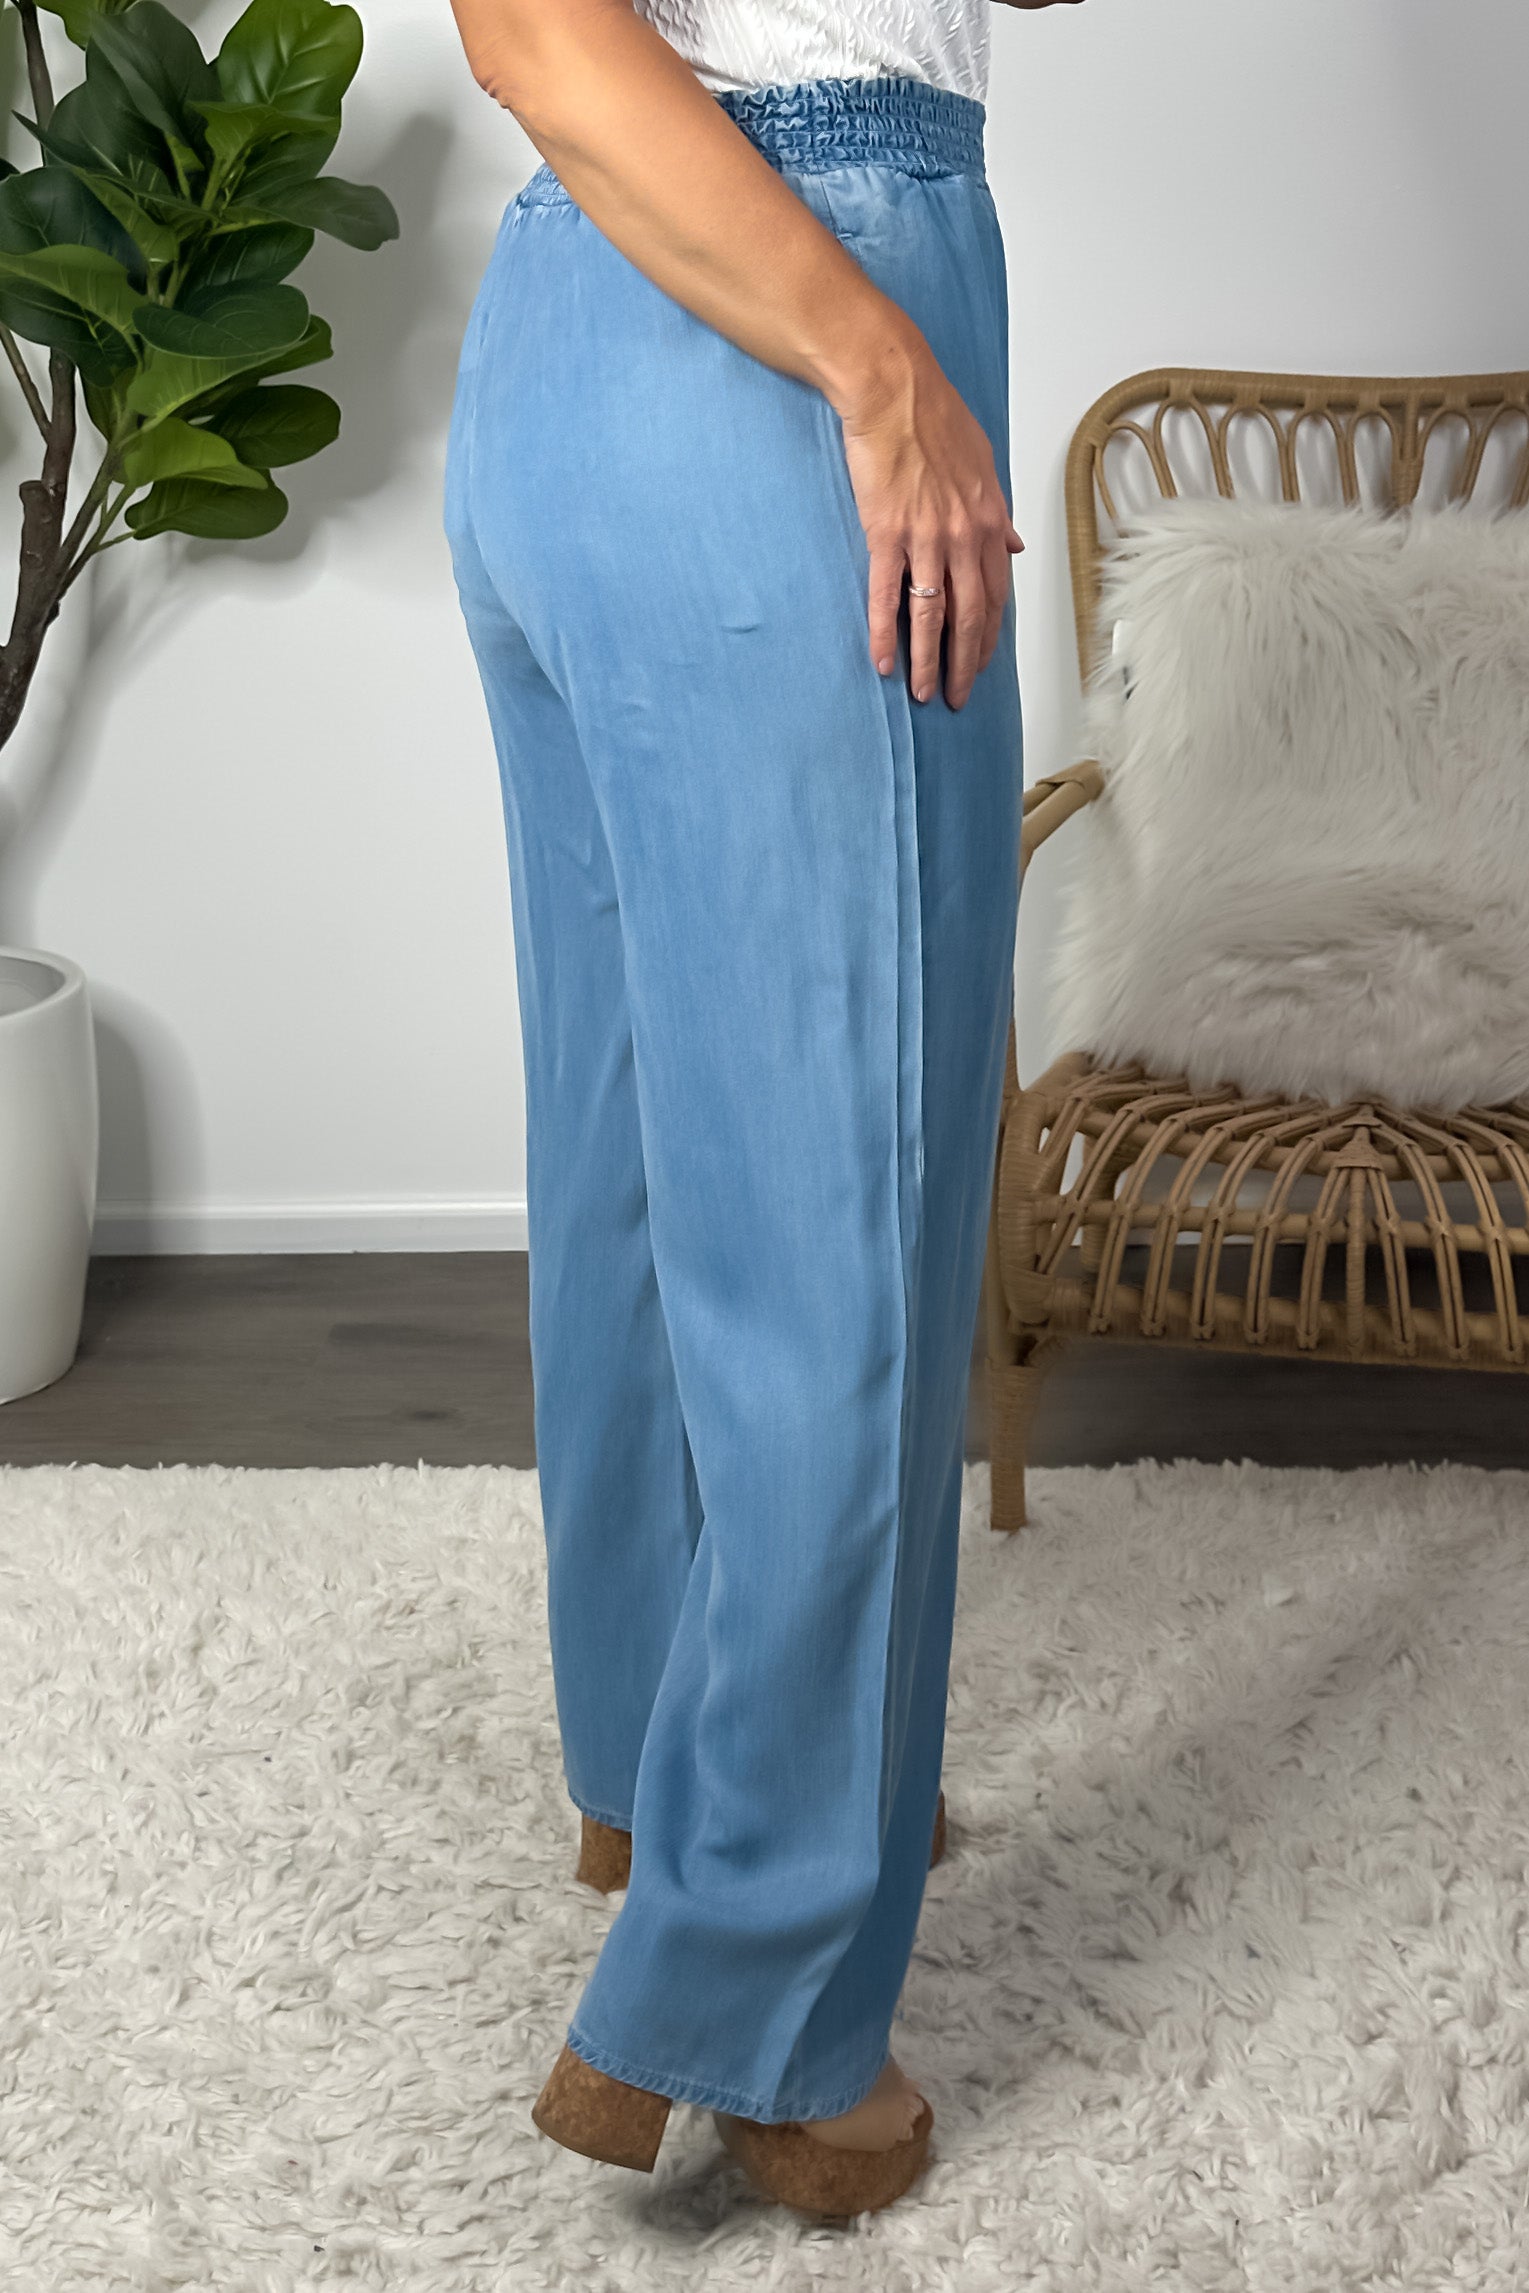 Soft Surroundings Flat Front Linen Pants for Women